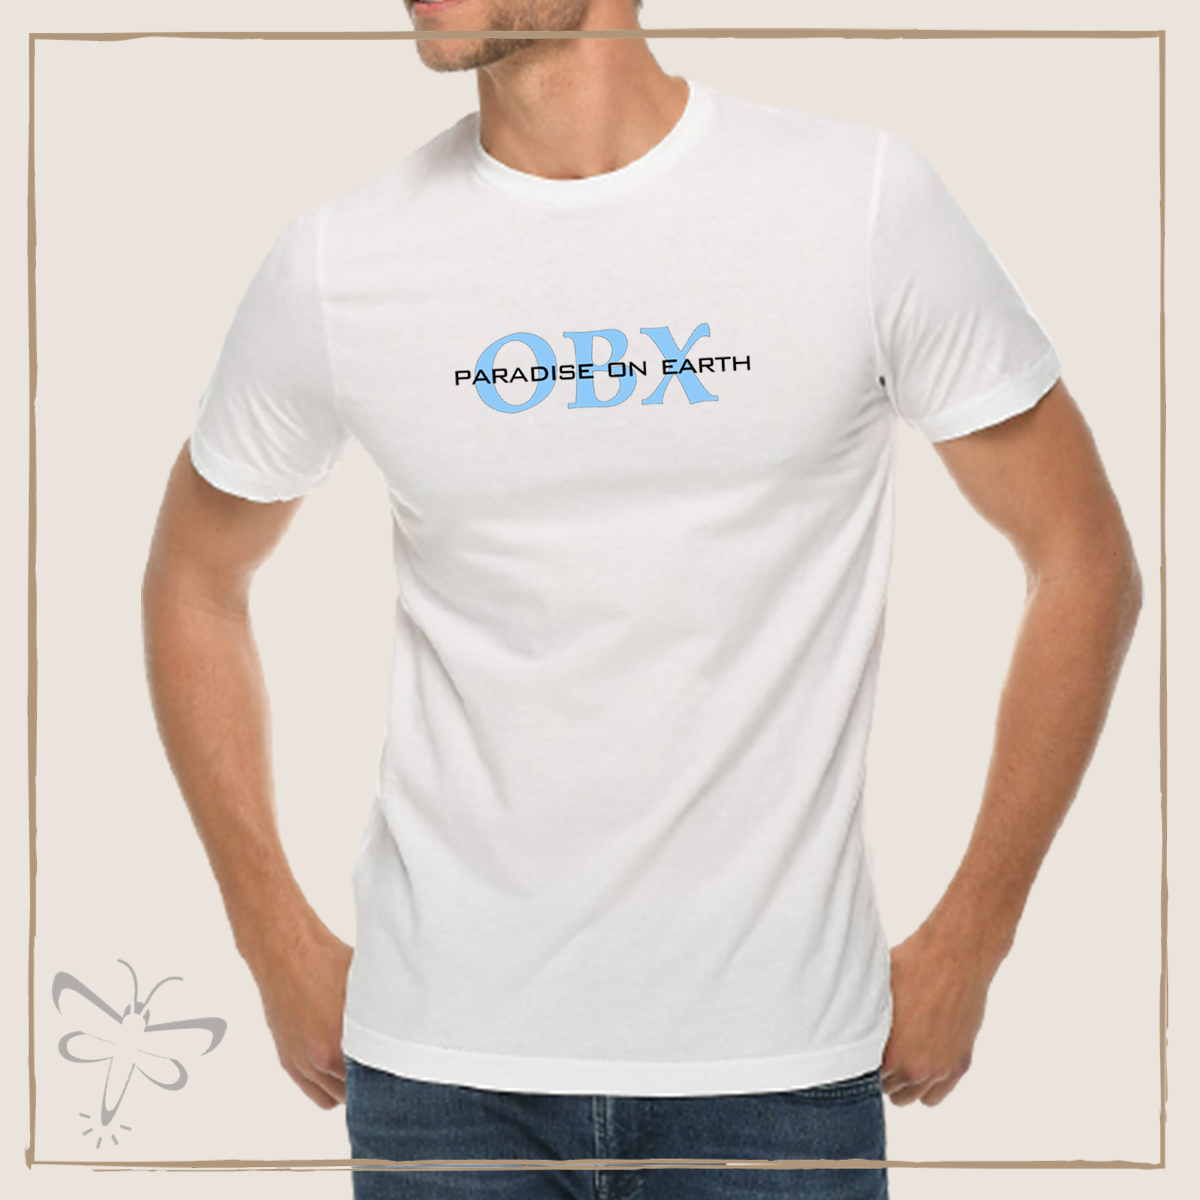 Obx Paradise On Earth T-Shirt S / White Full